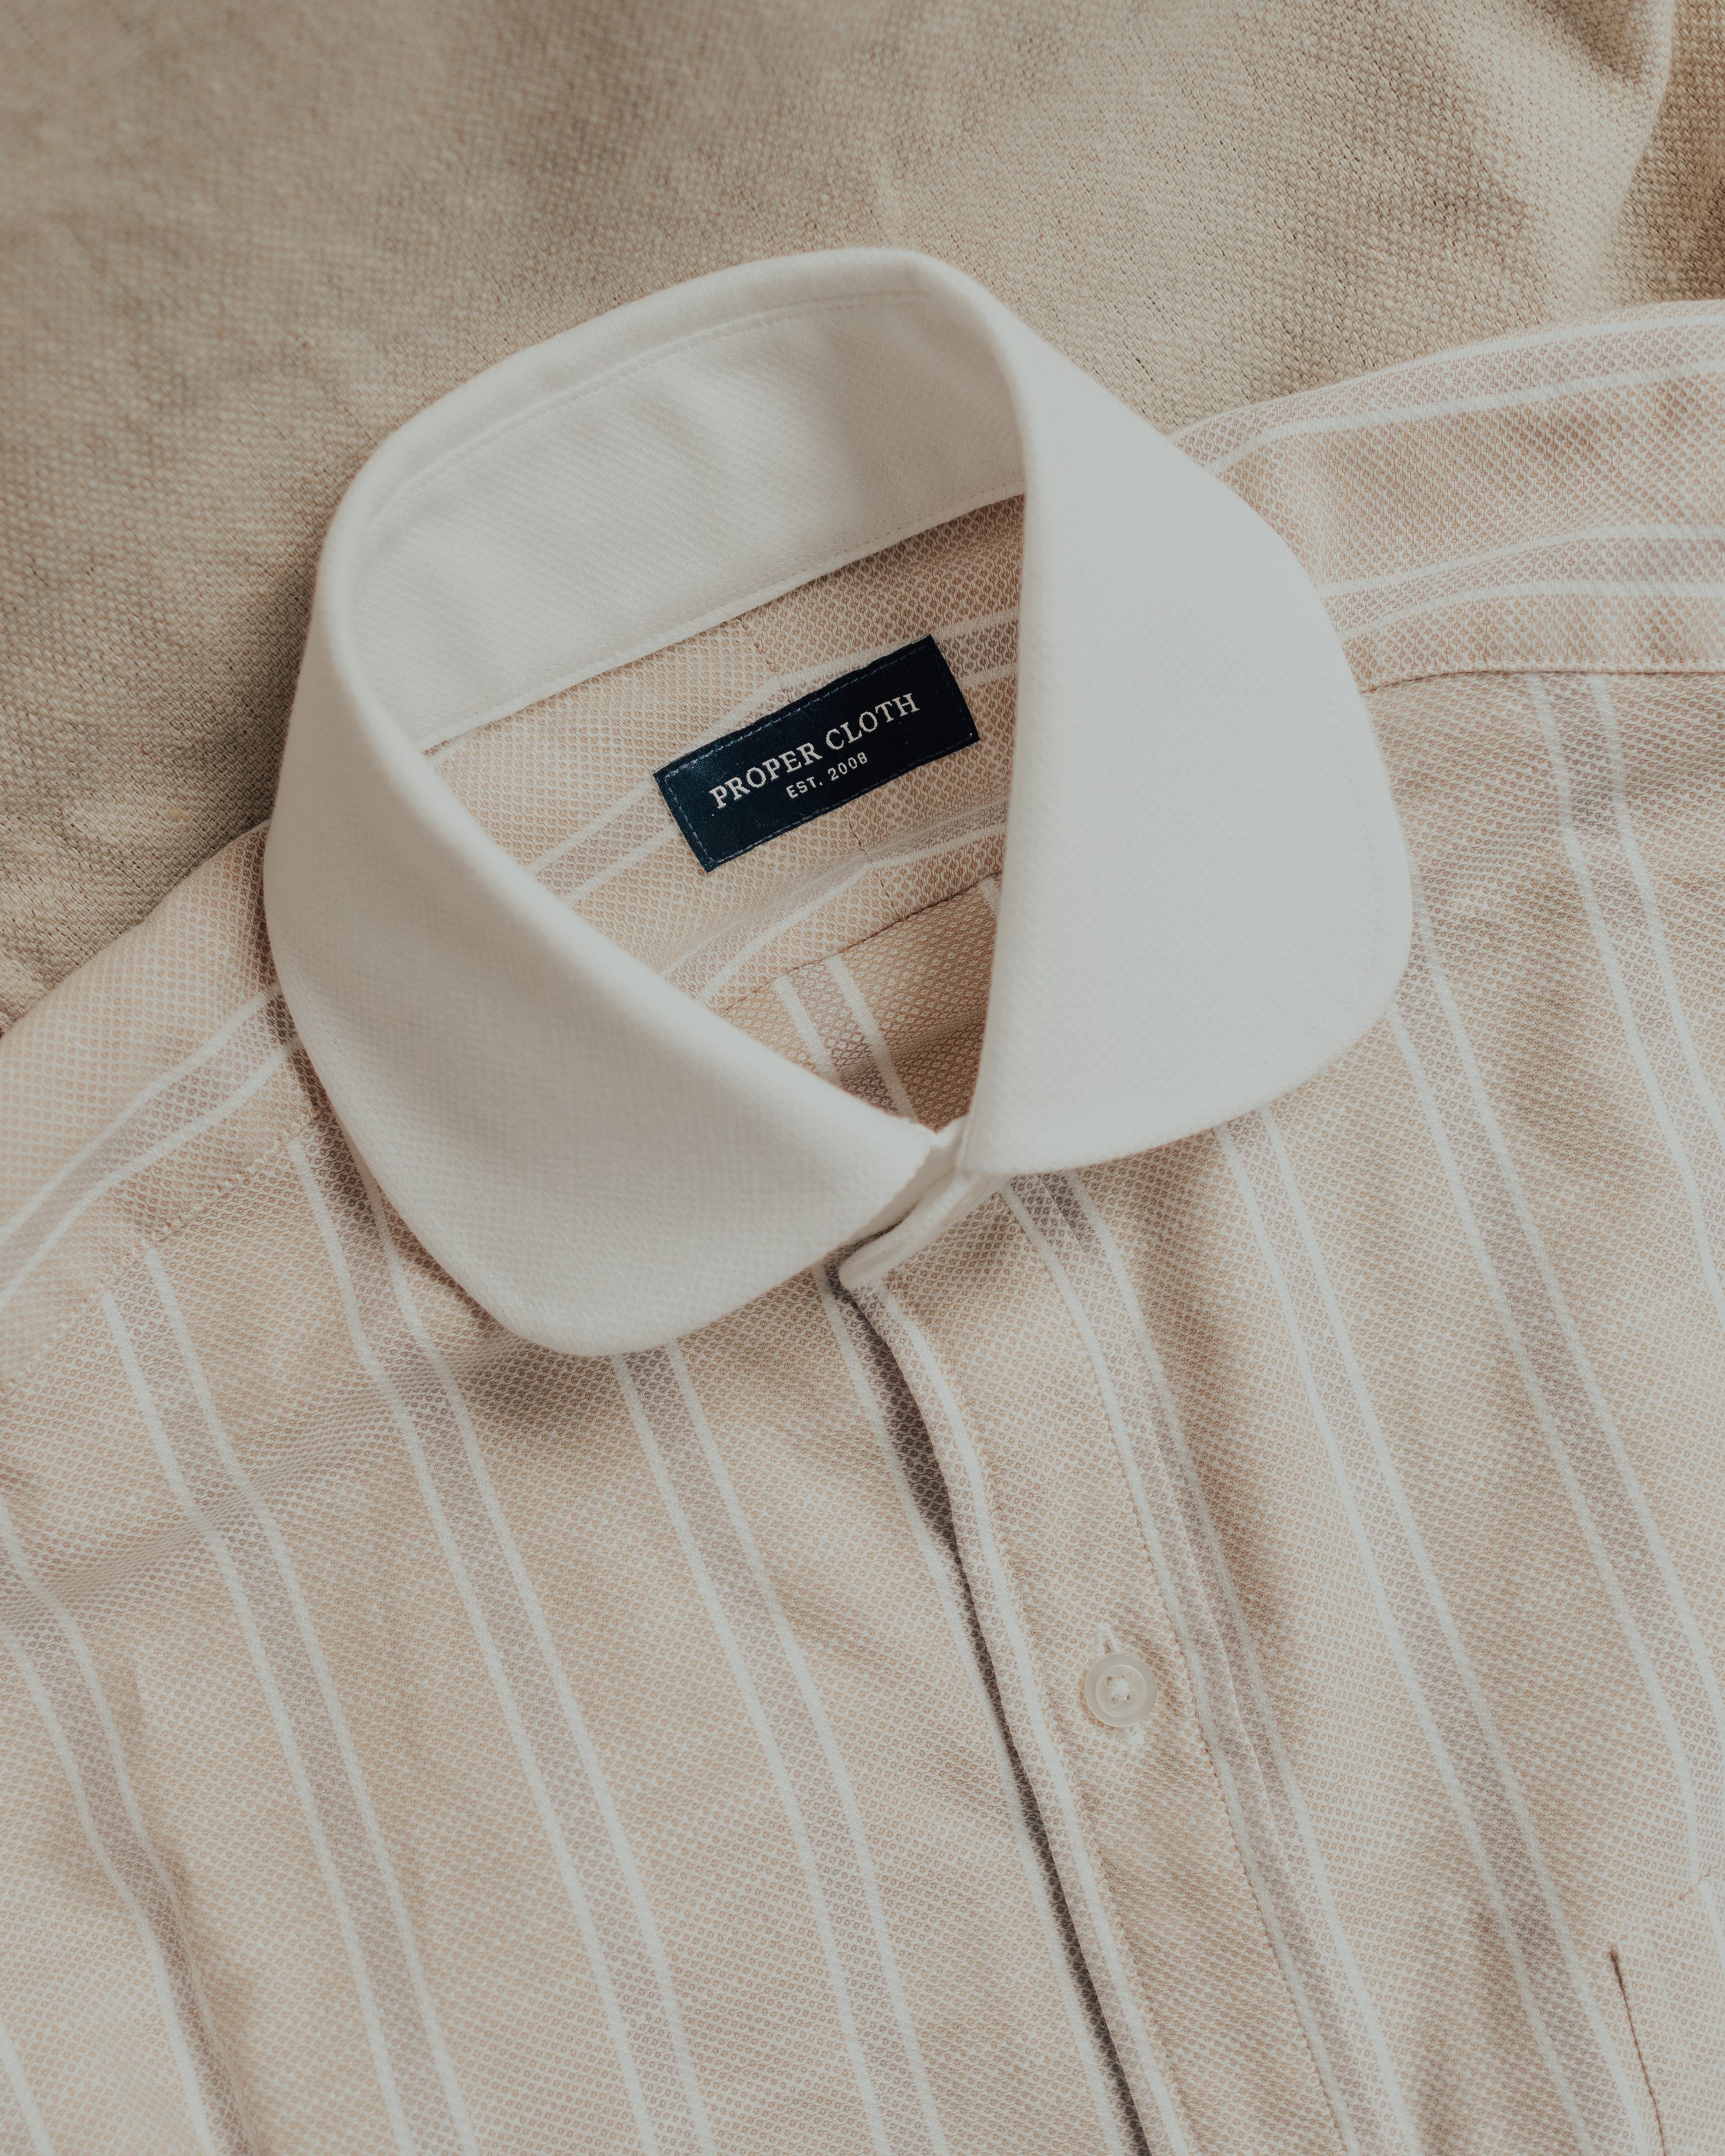   Proper Cloth    Beige Stripe Pique Club Collar Shirt    $155  